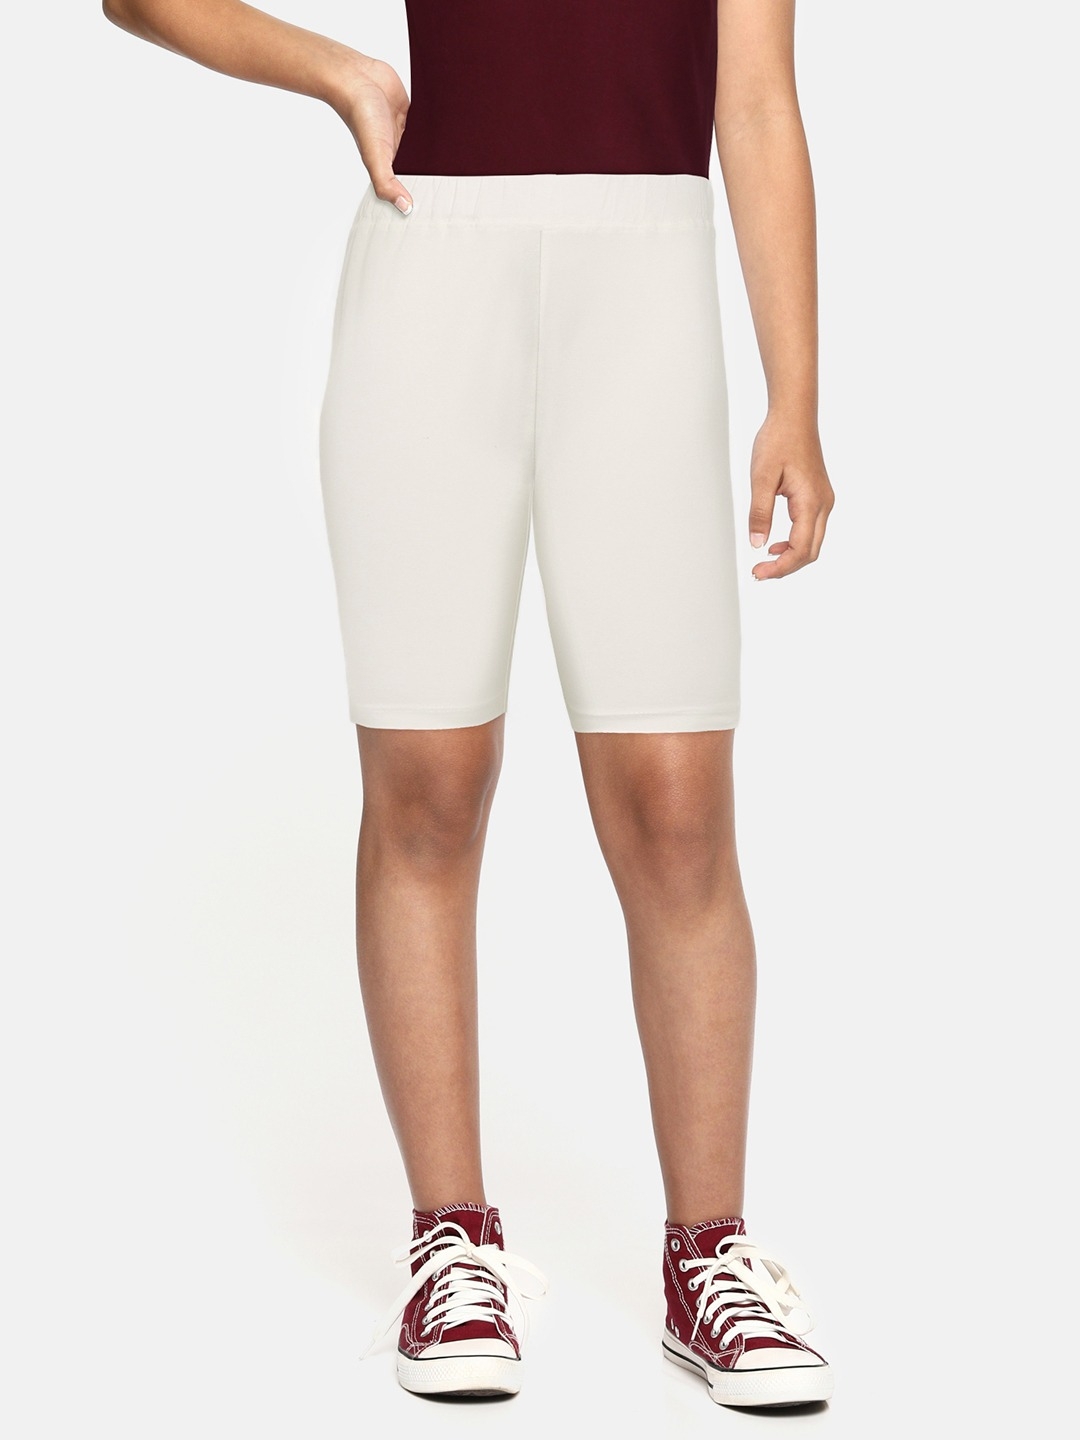 SEYBIL | SEYBIL Girls Pack of 2 Solid Slim Fit Shorts